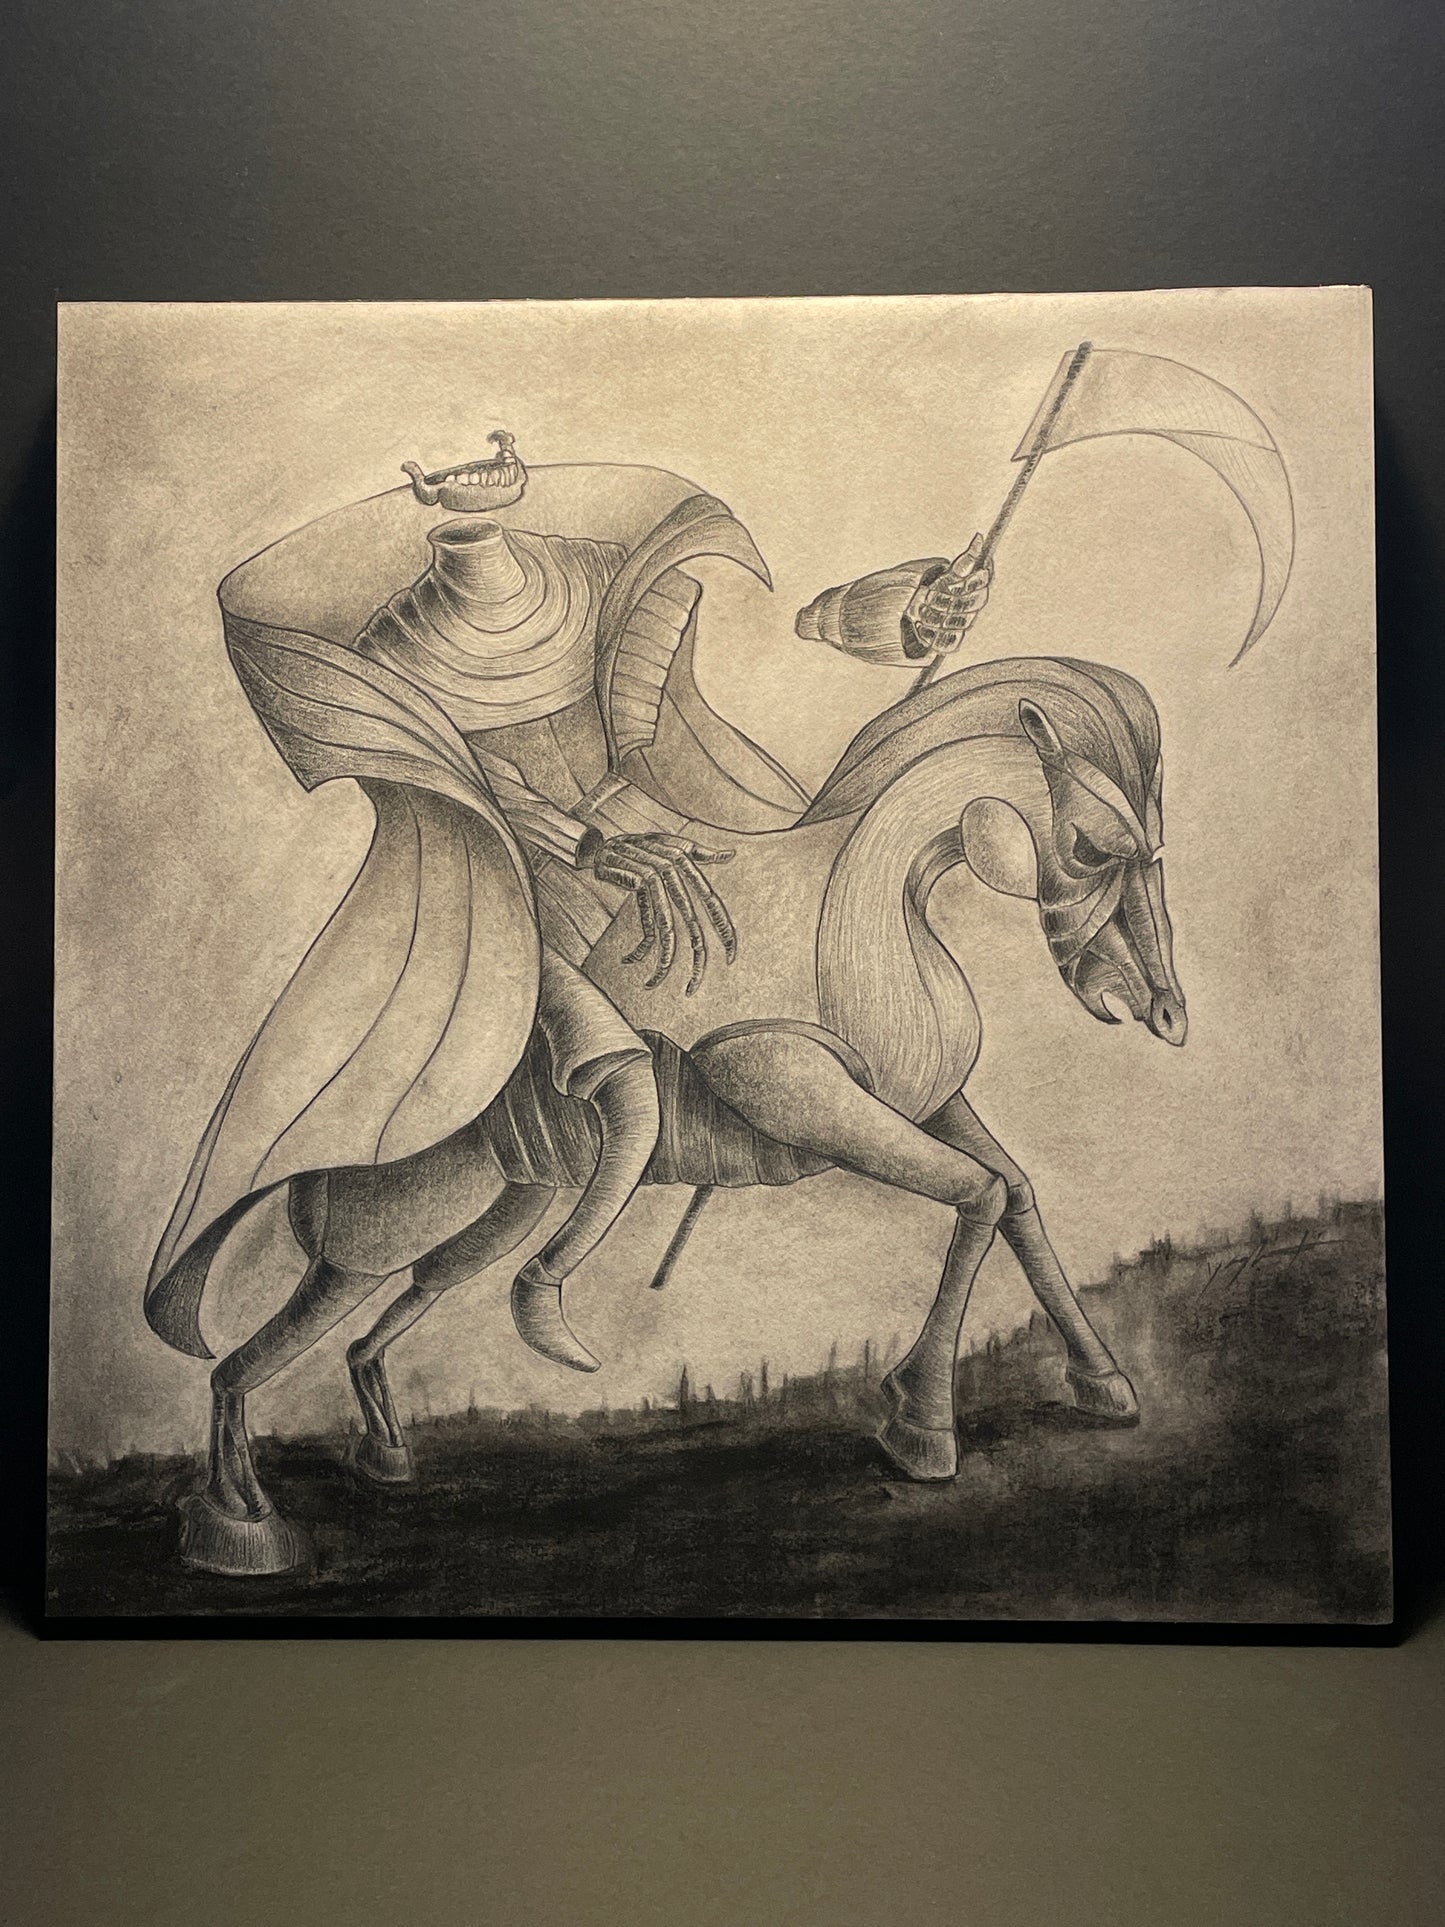 The Horseman - Mixed Media Drawing on Board